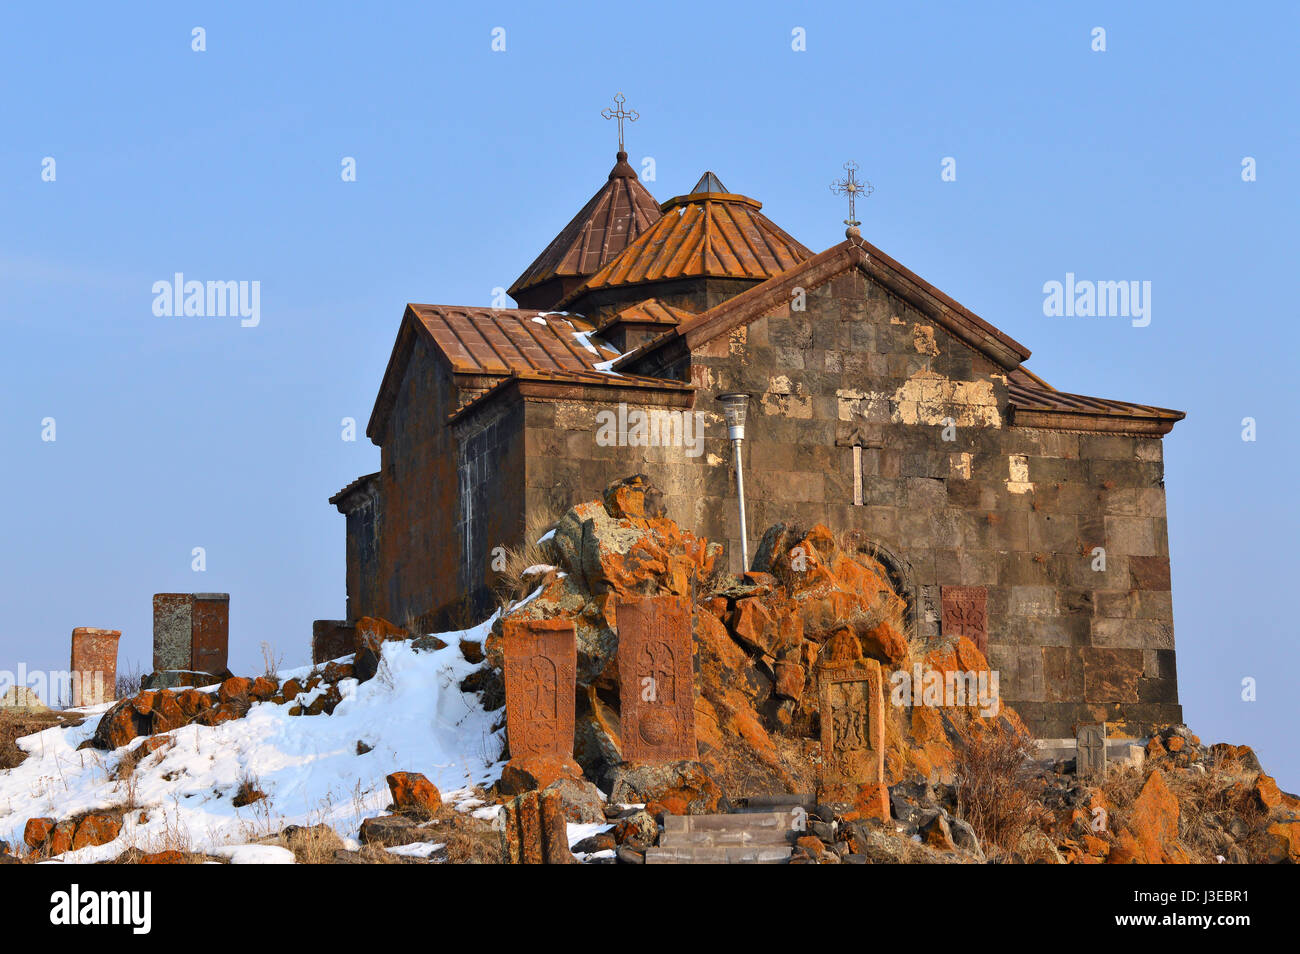 Hayravank Monastery - Medieval Christian monastery in Armenia Stock Photo